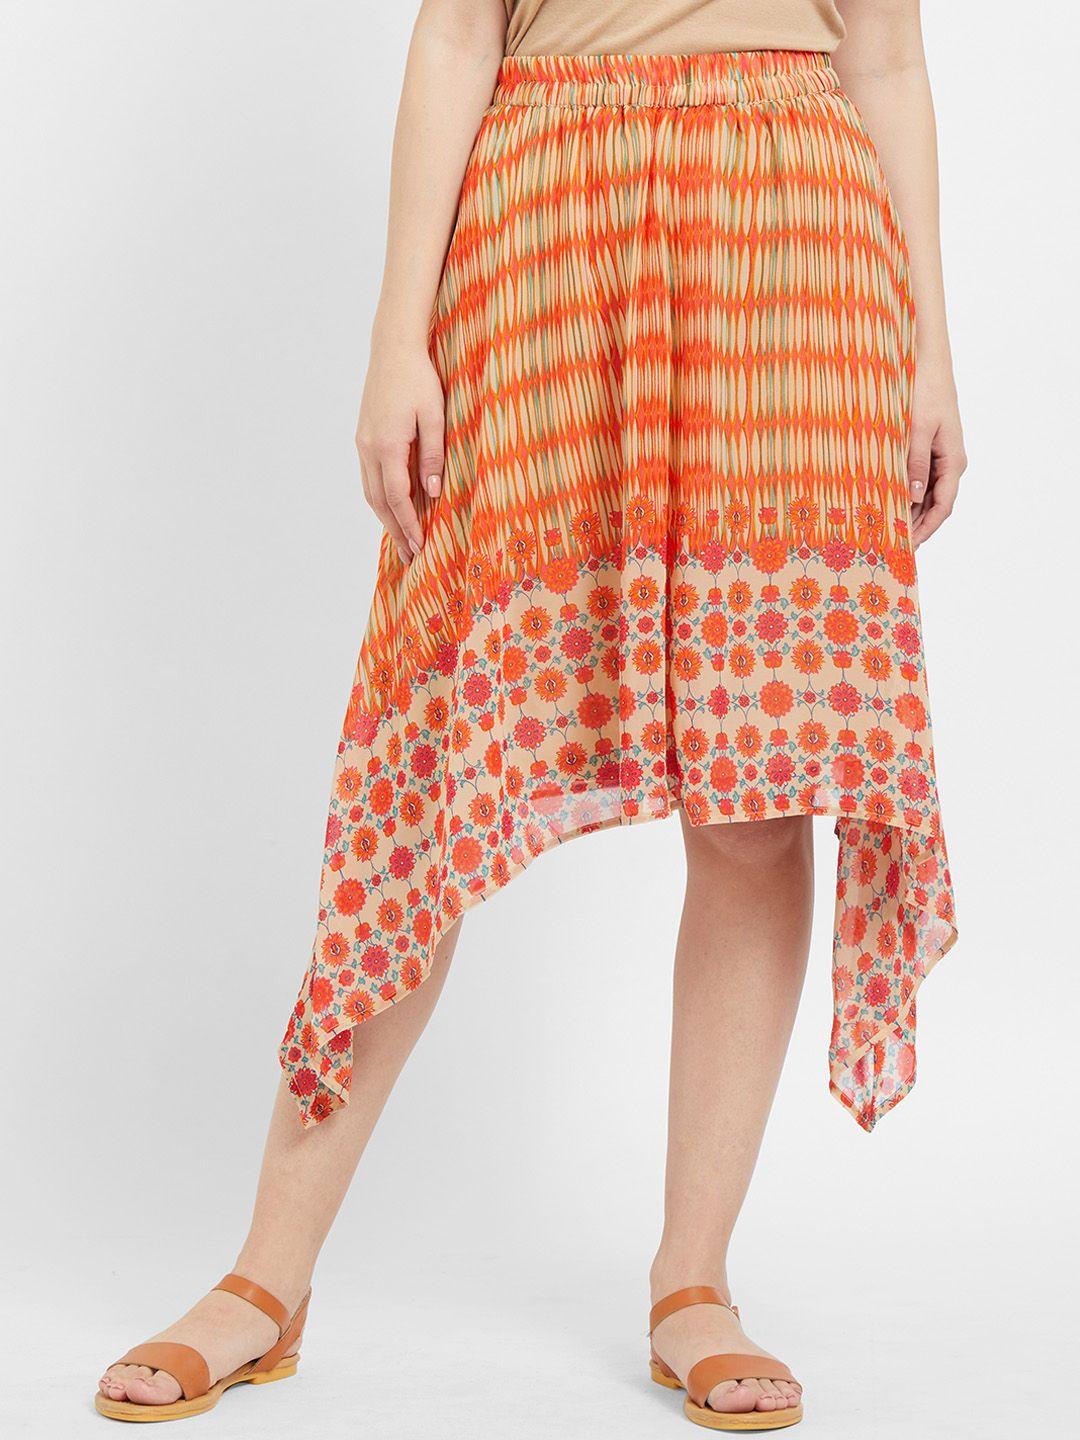 109f-women-orange-printed-high-low-skirt